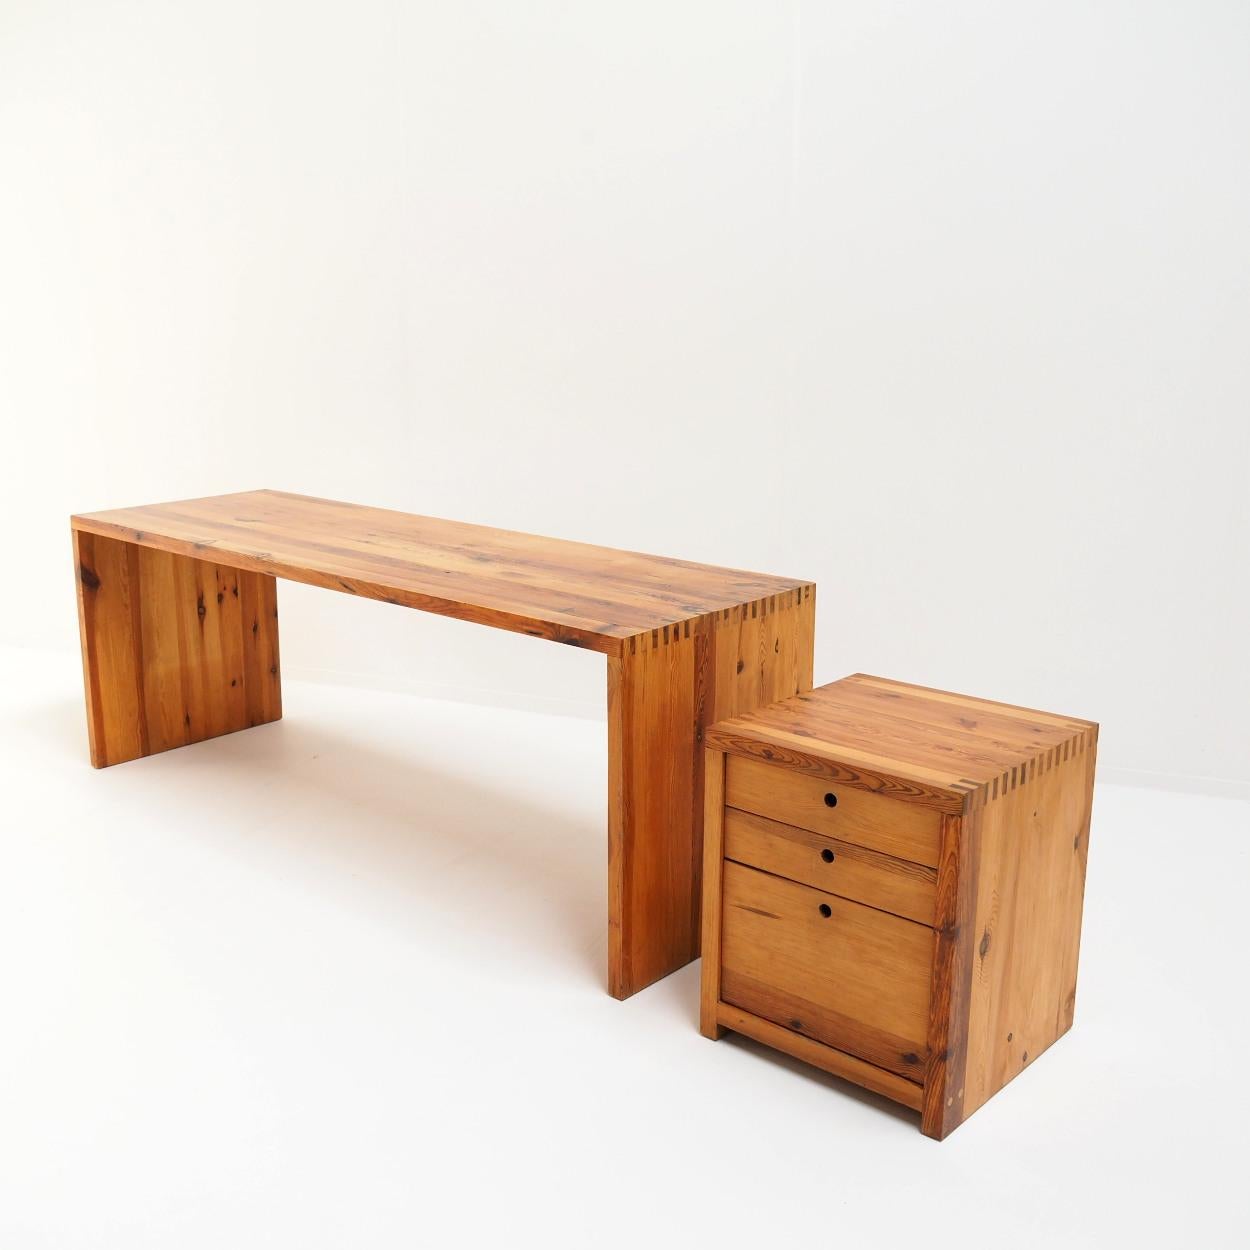 Mid-Century Modern Desk with Drawer Unit in Solid Pine by Dutch Designer Ate Van Apeldoorn For Sale